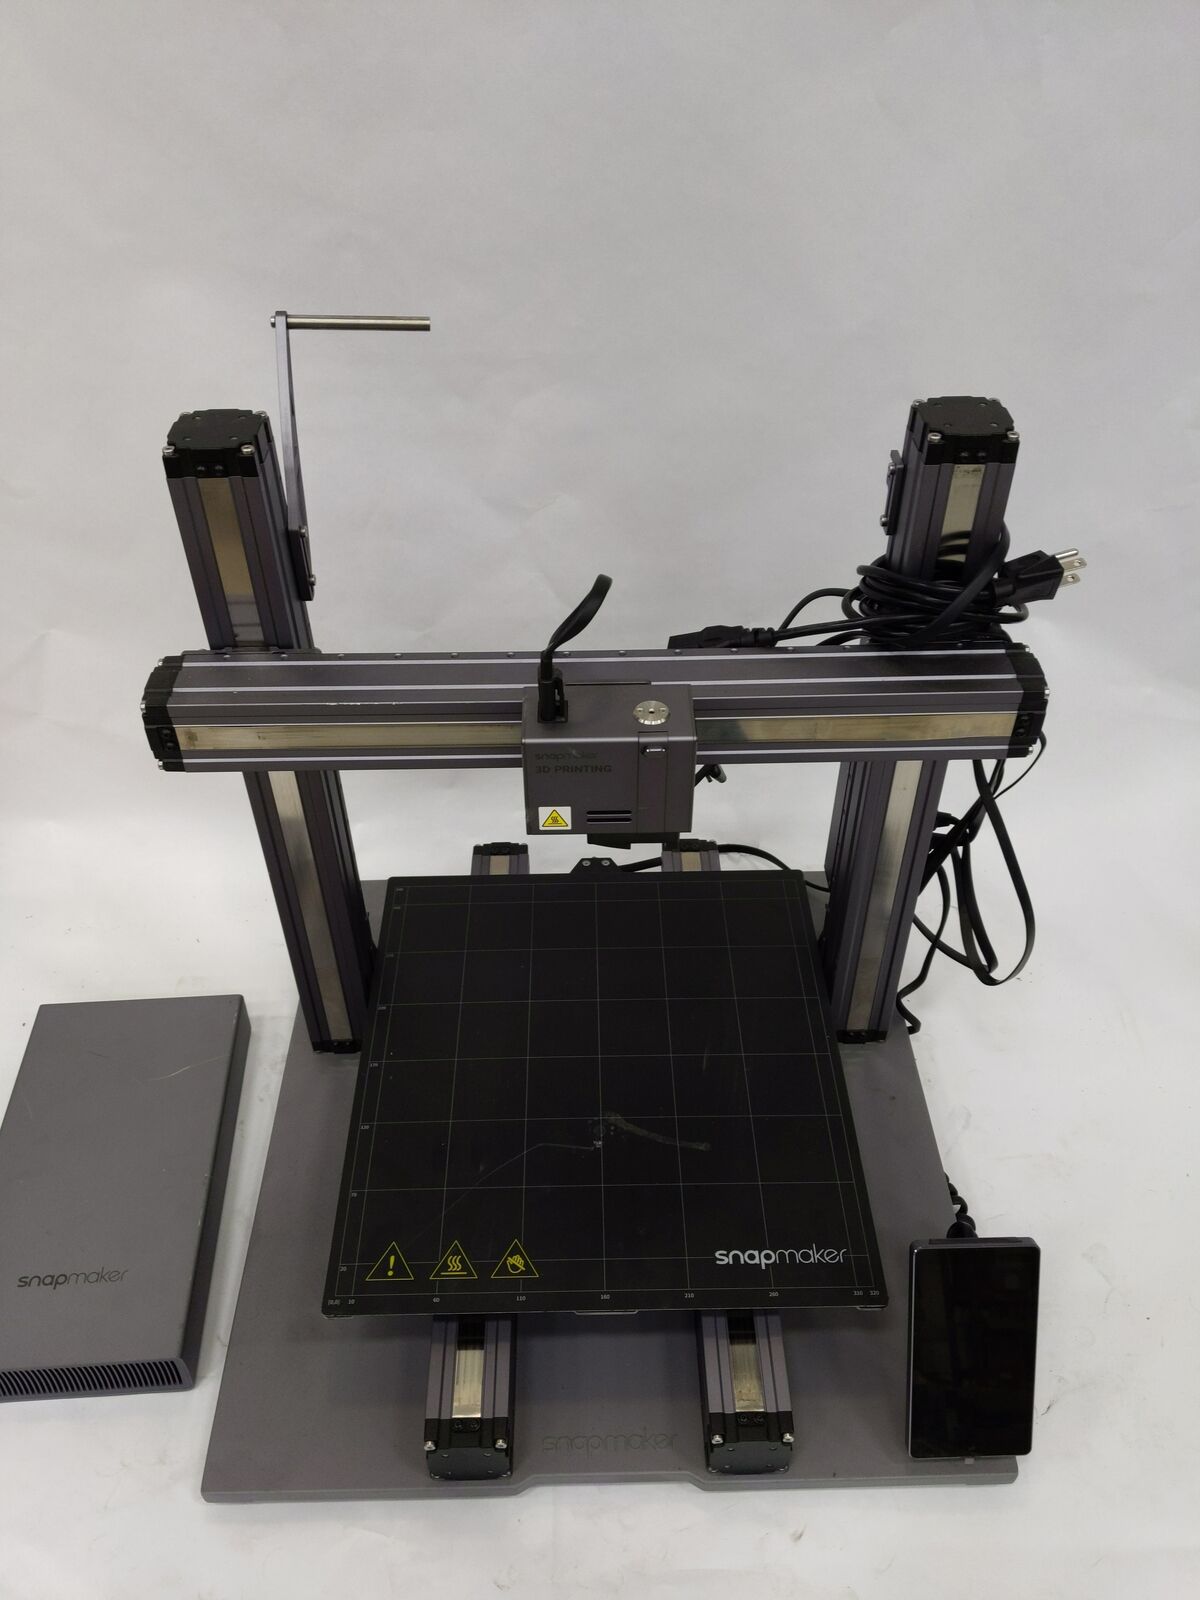 Snapmaker 2.0 F350 3D Printer